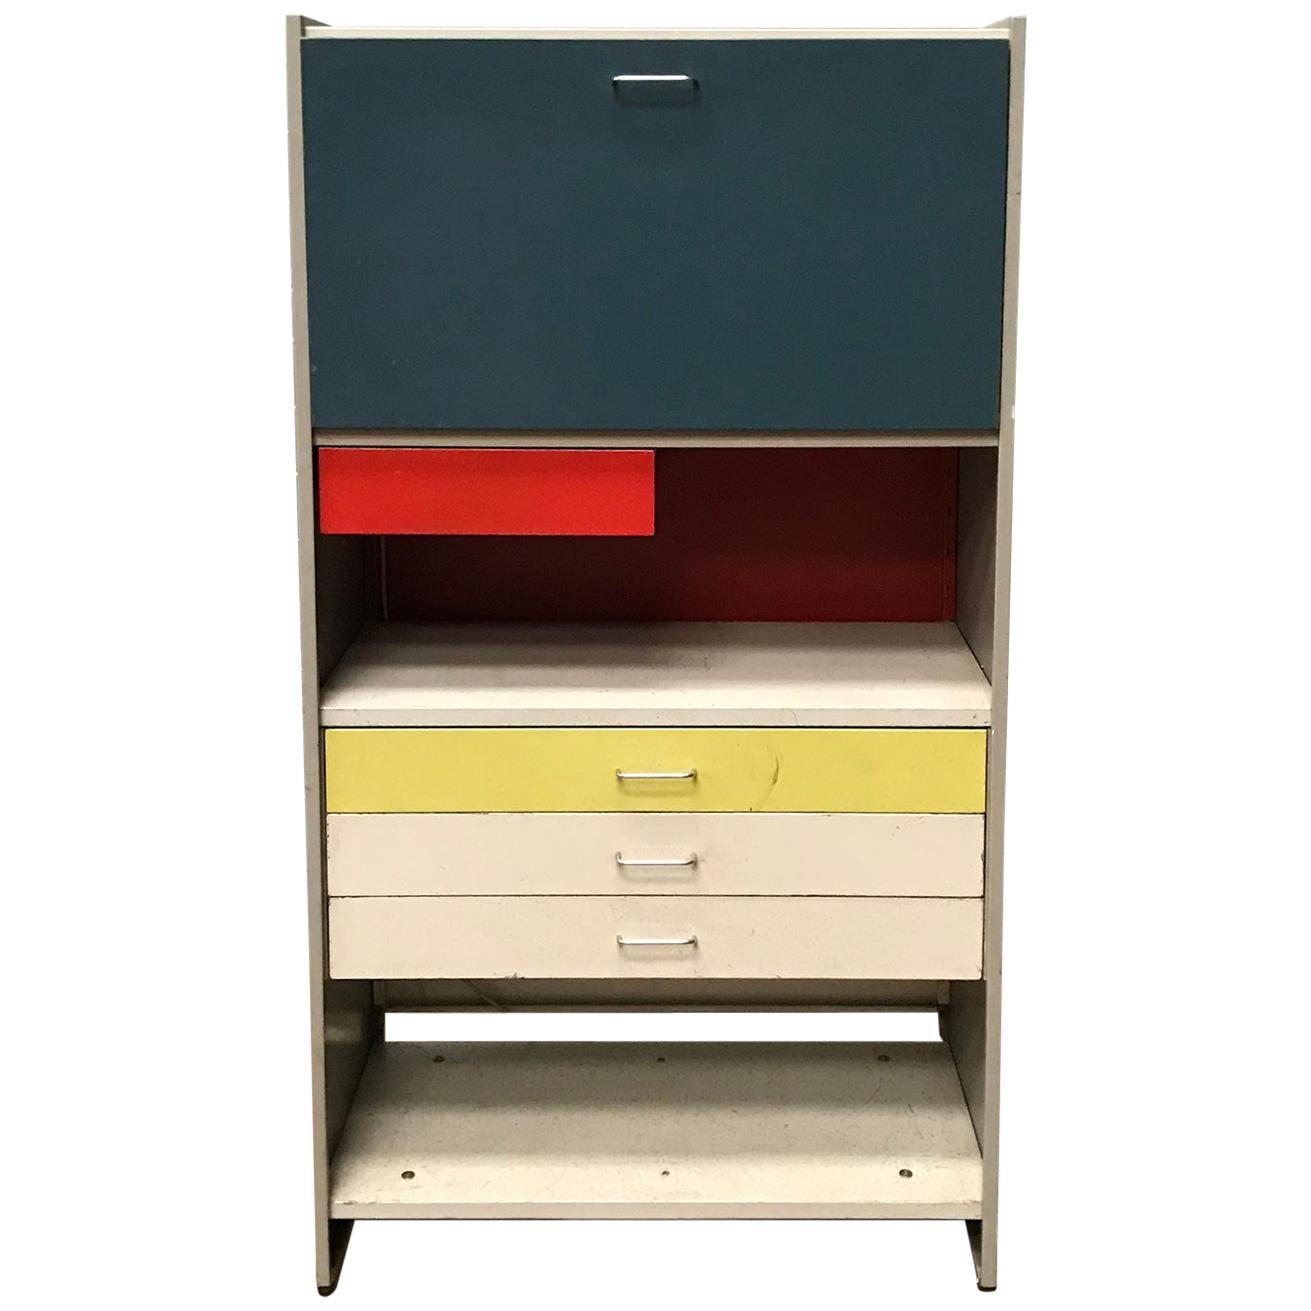 1959, Cordemeyer, Gispen, Desk Storage Cabinet 5600 with Folding Desktop